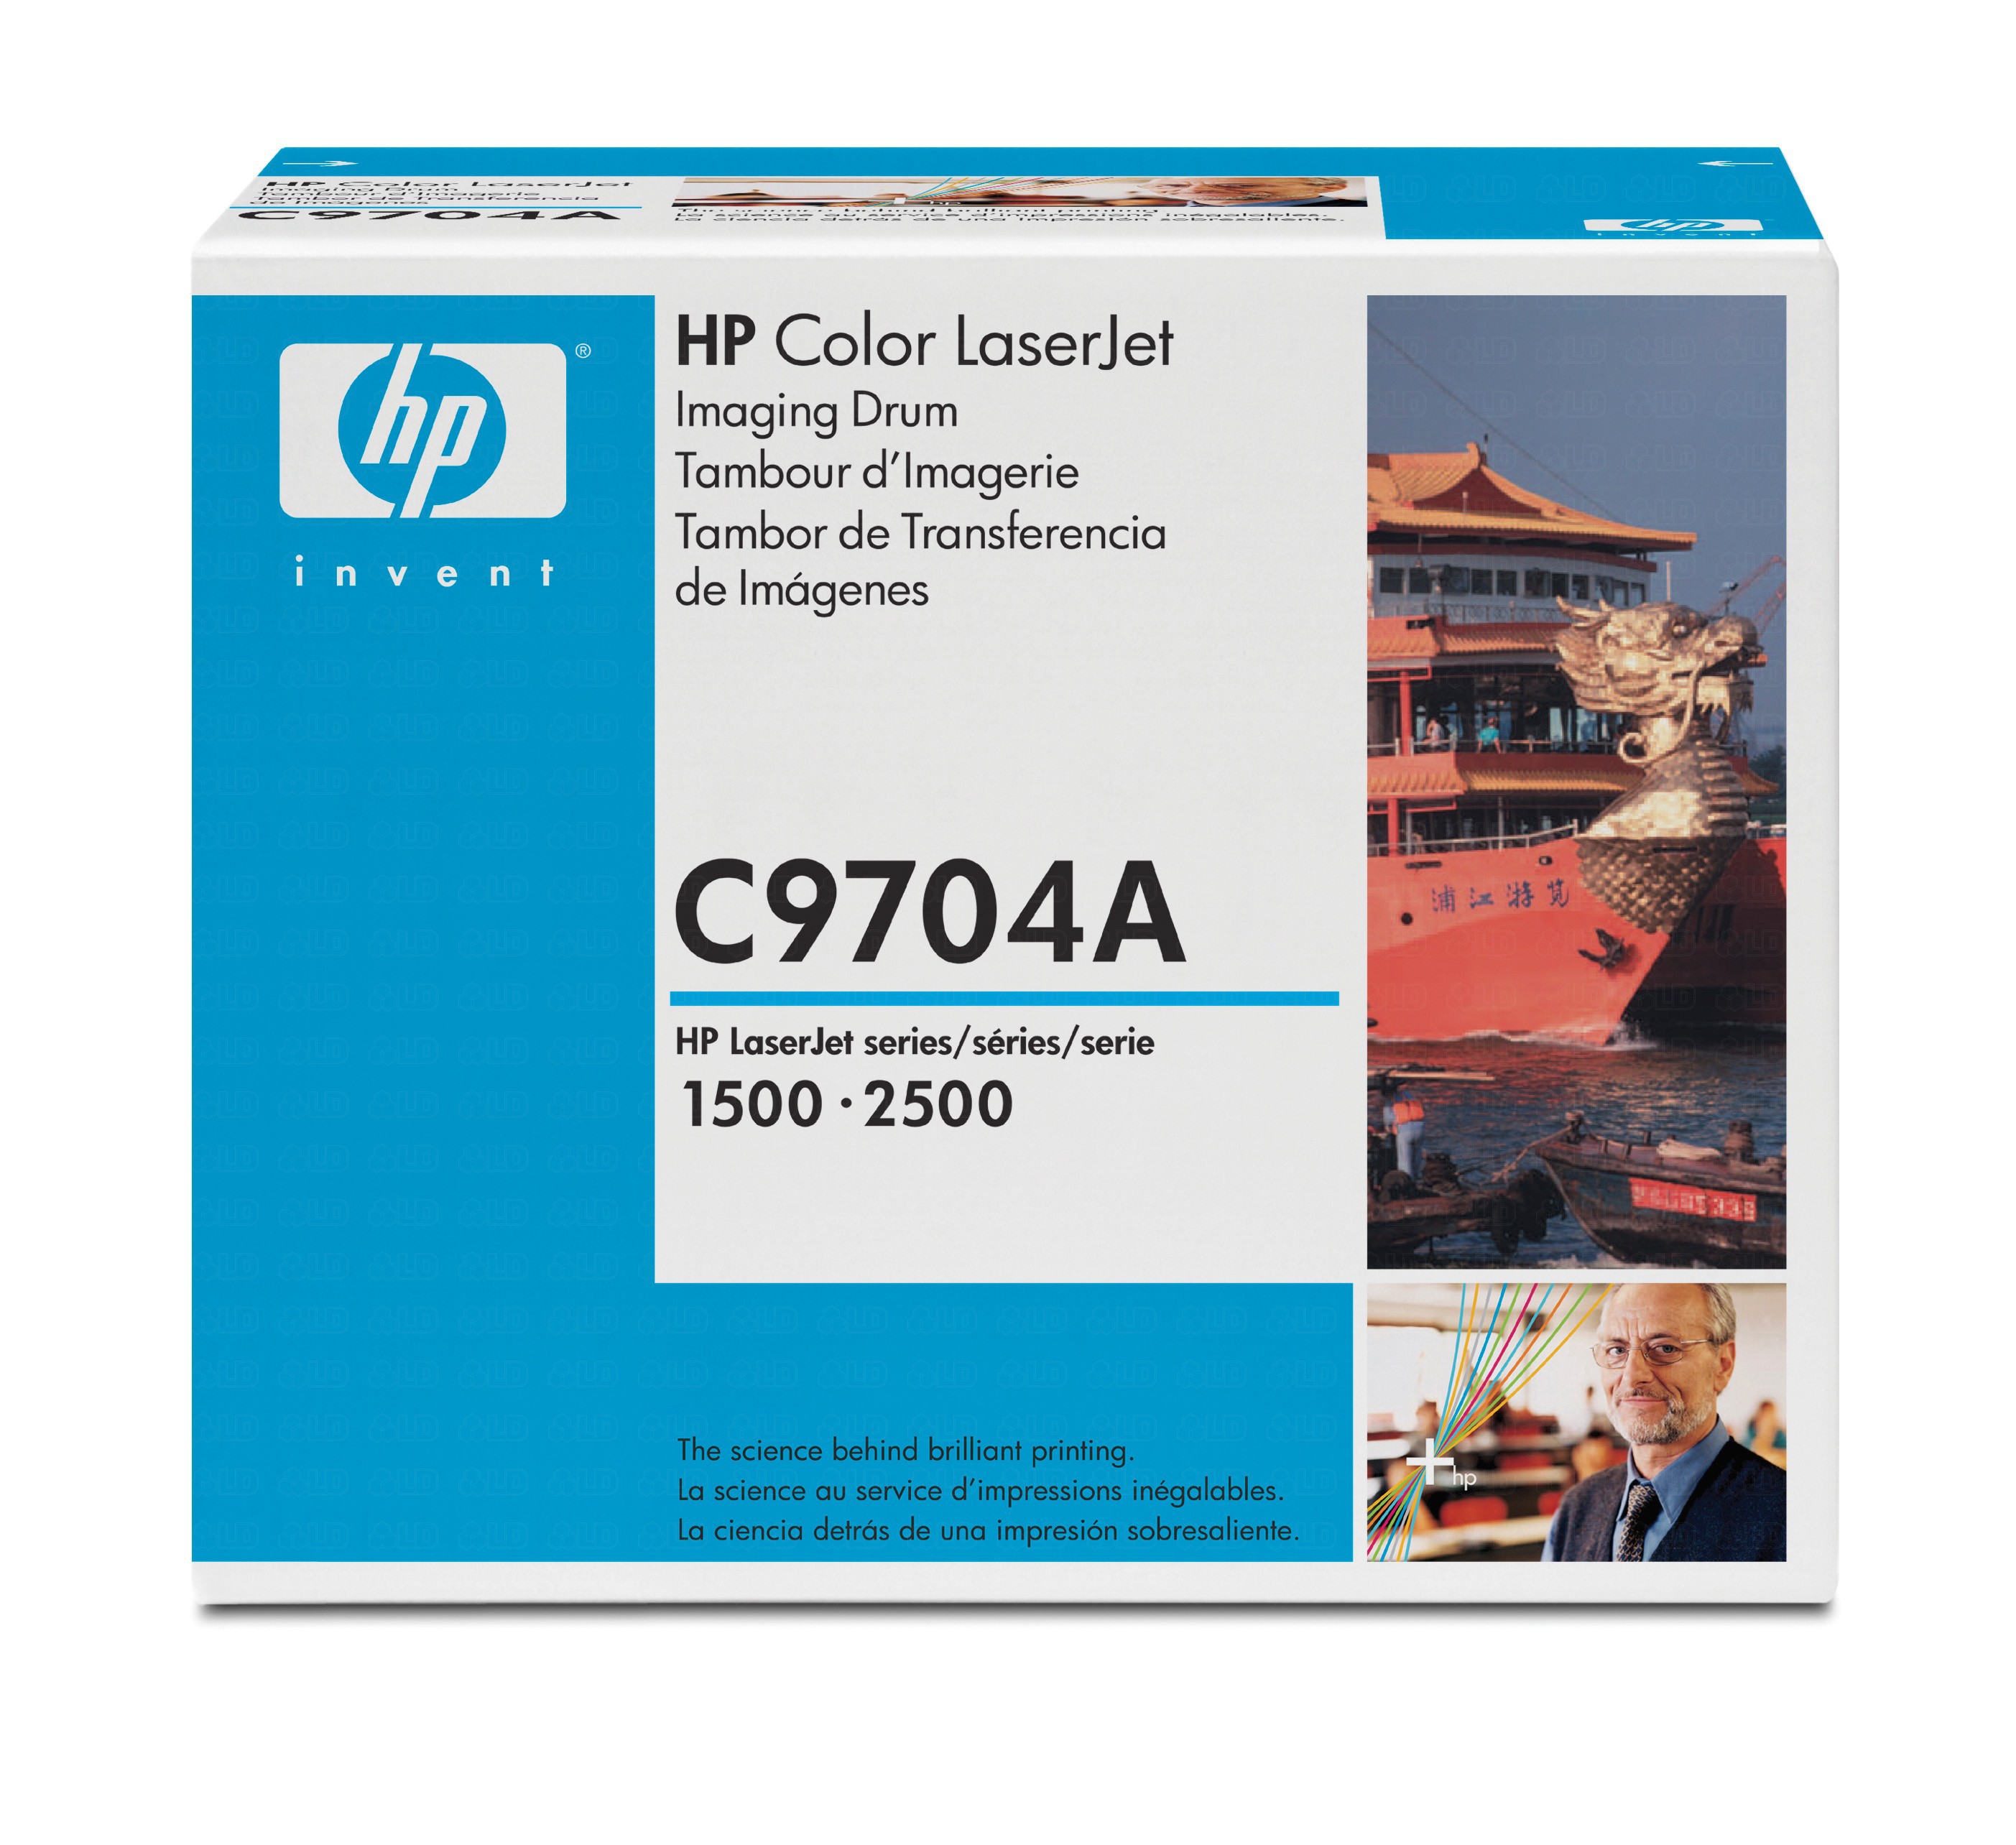 HP Color LaserJet 1500 /2500 C9704A Imaging Drum - Click Image to Close